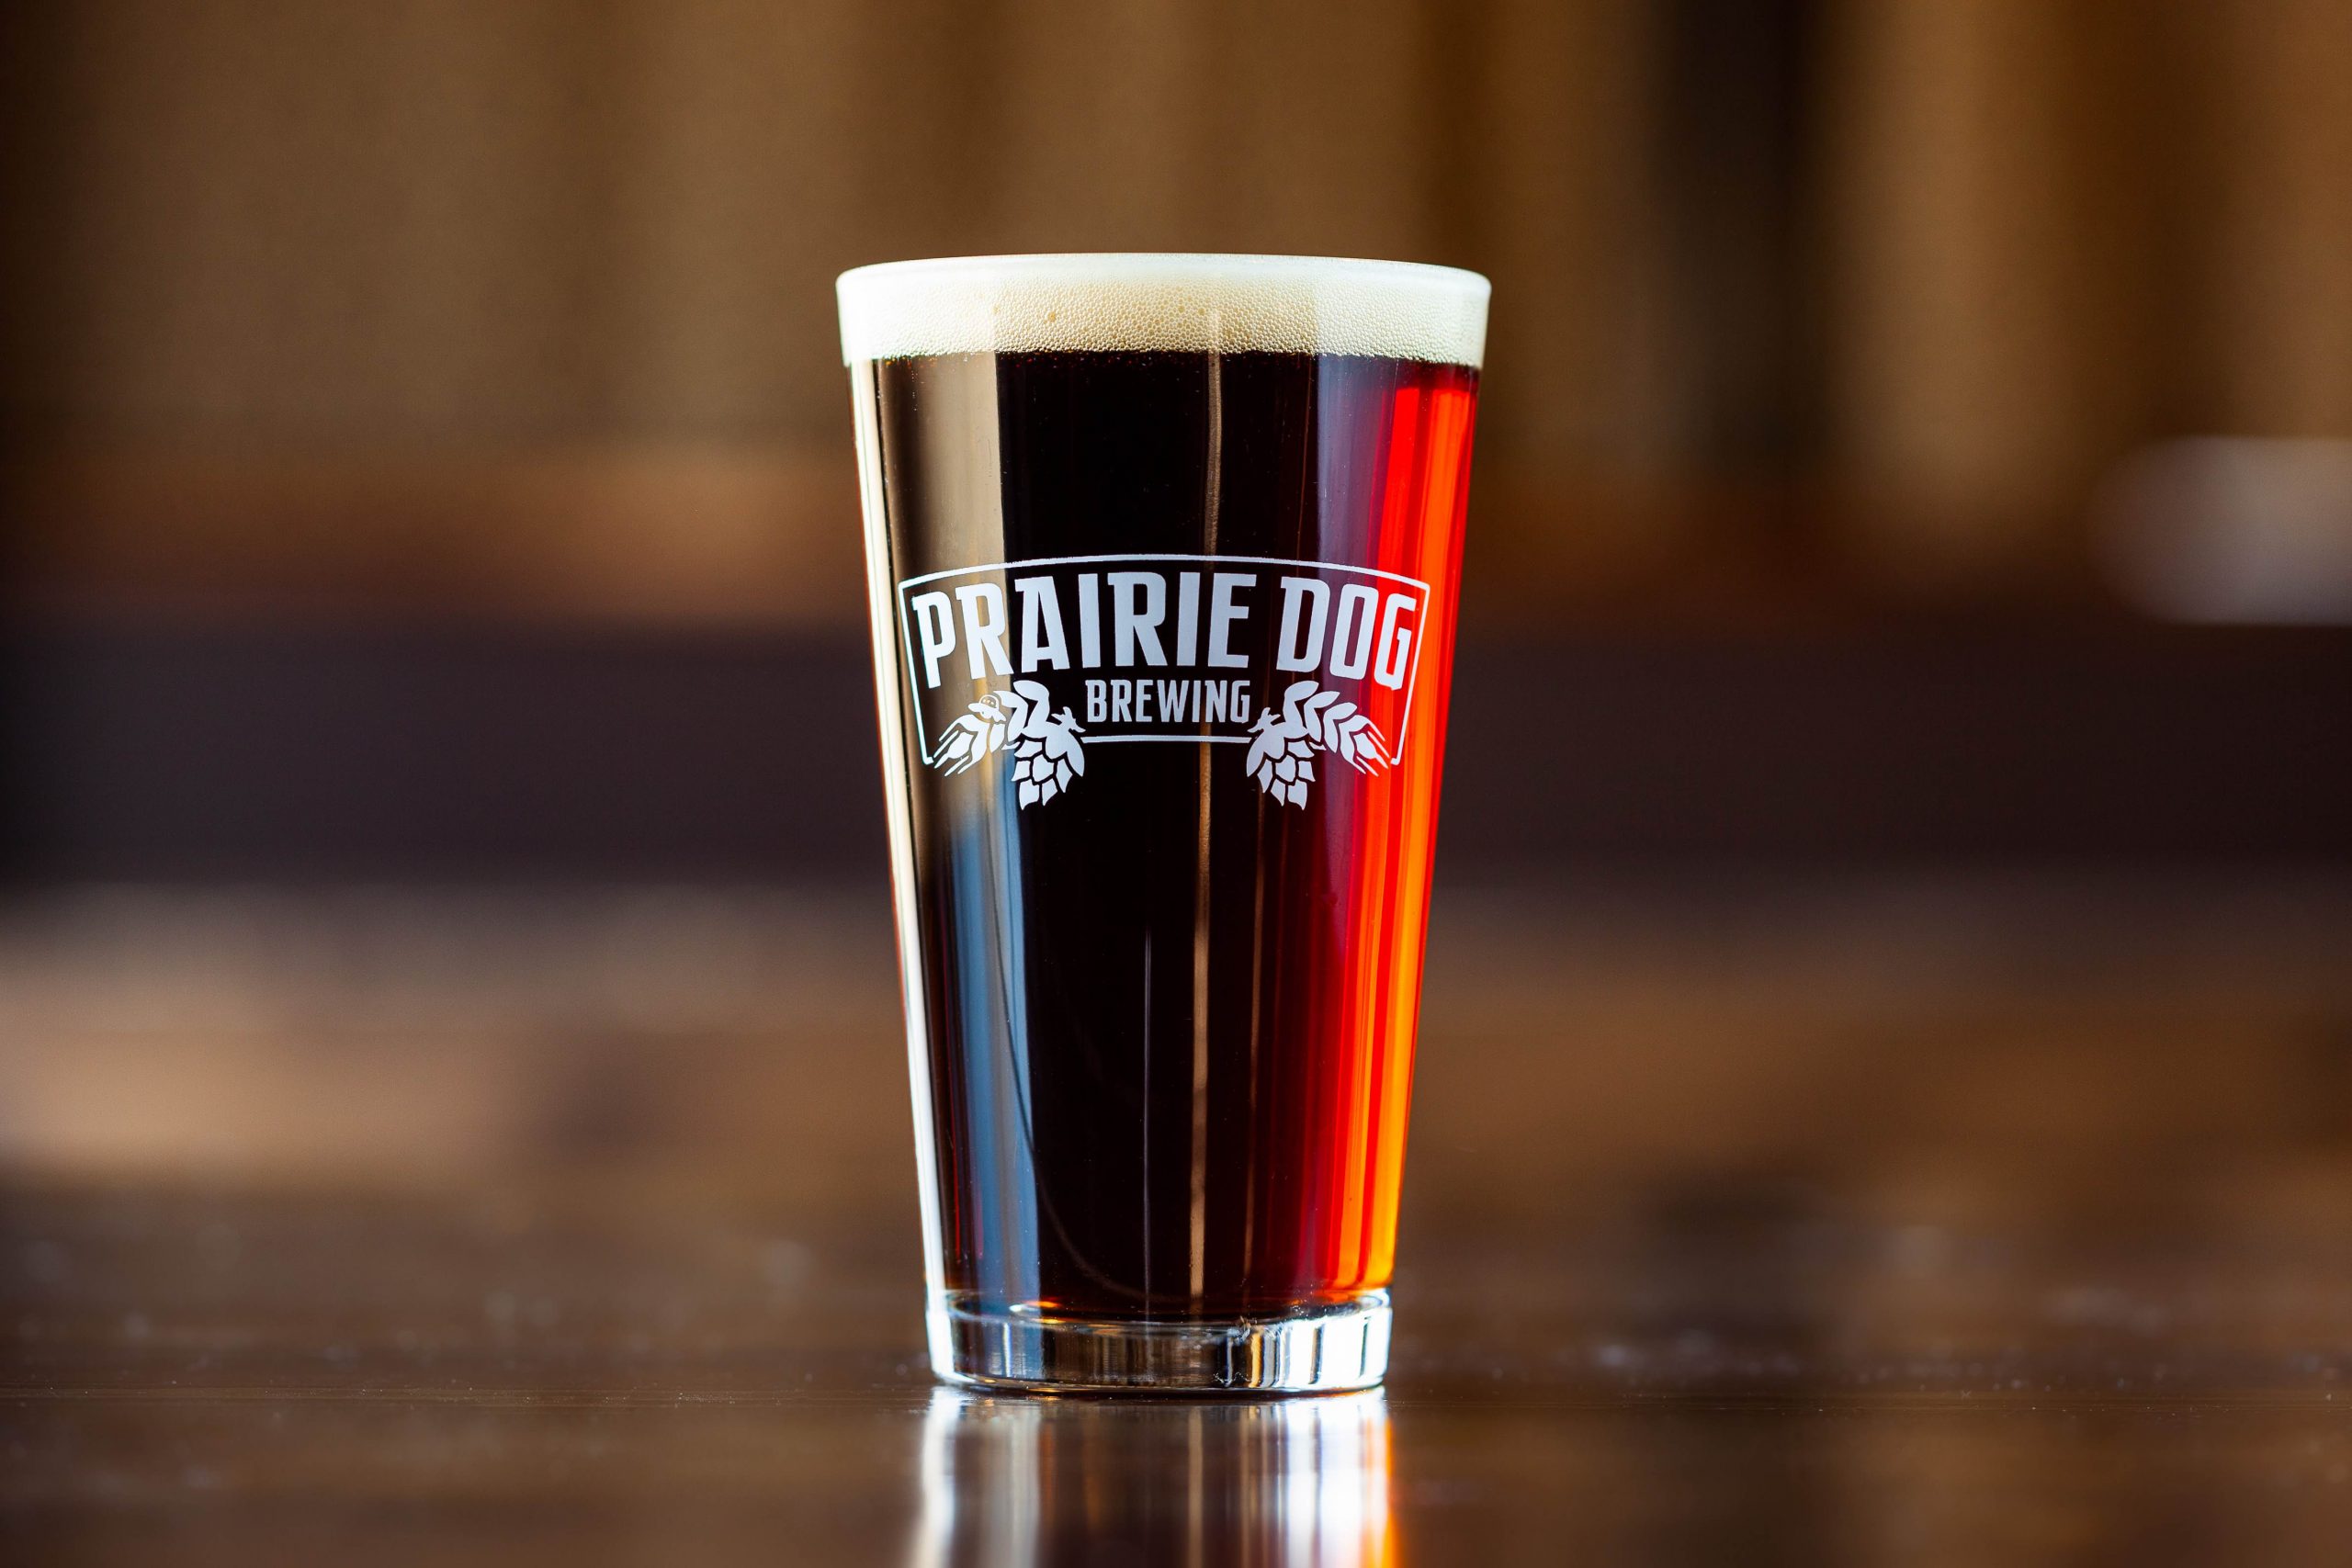 16-oz pint glass of Prairie Dog Gunnison's Red Ale